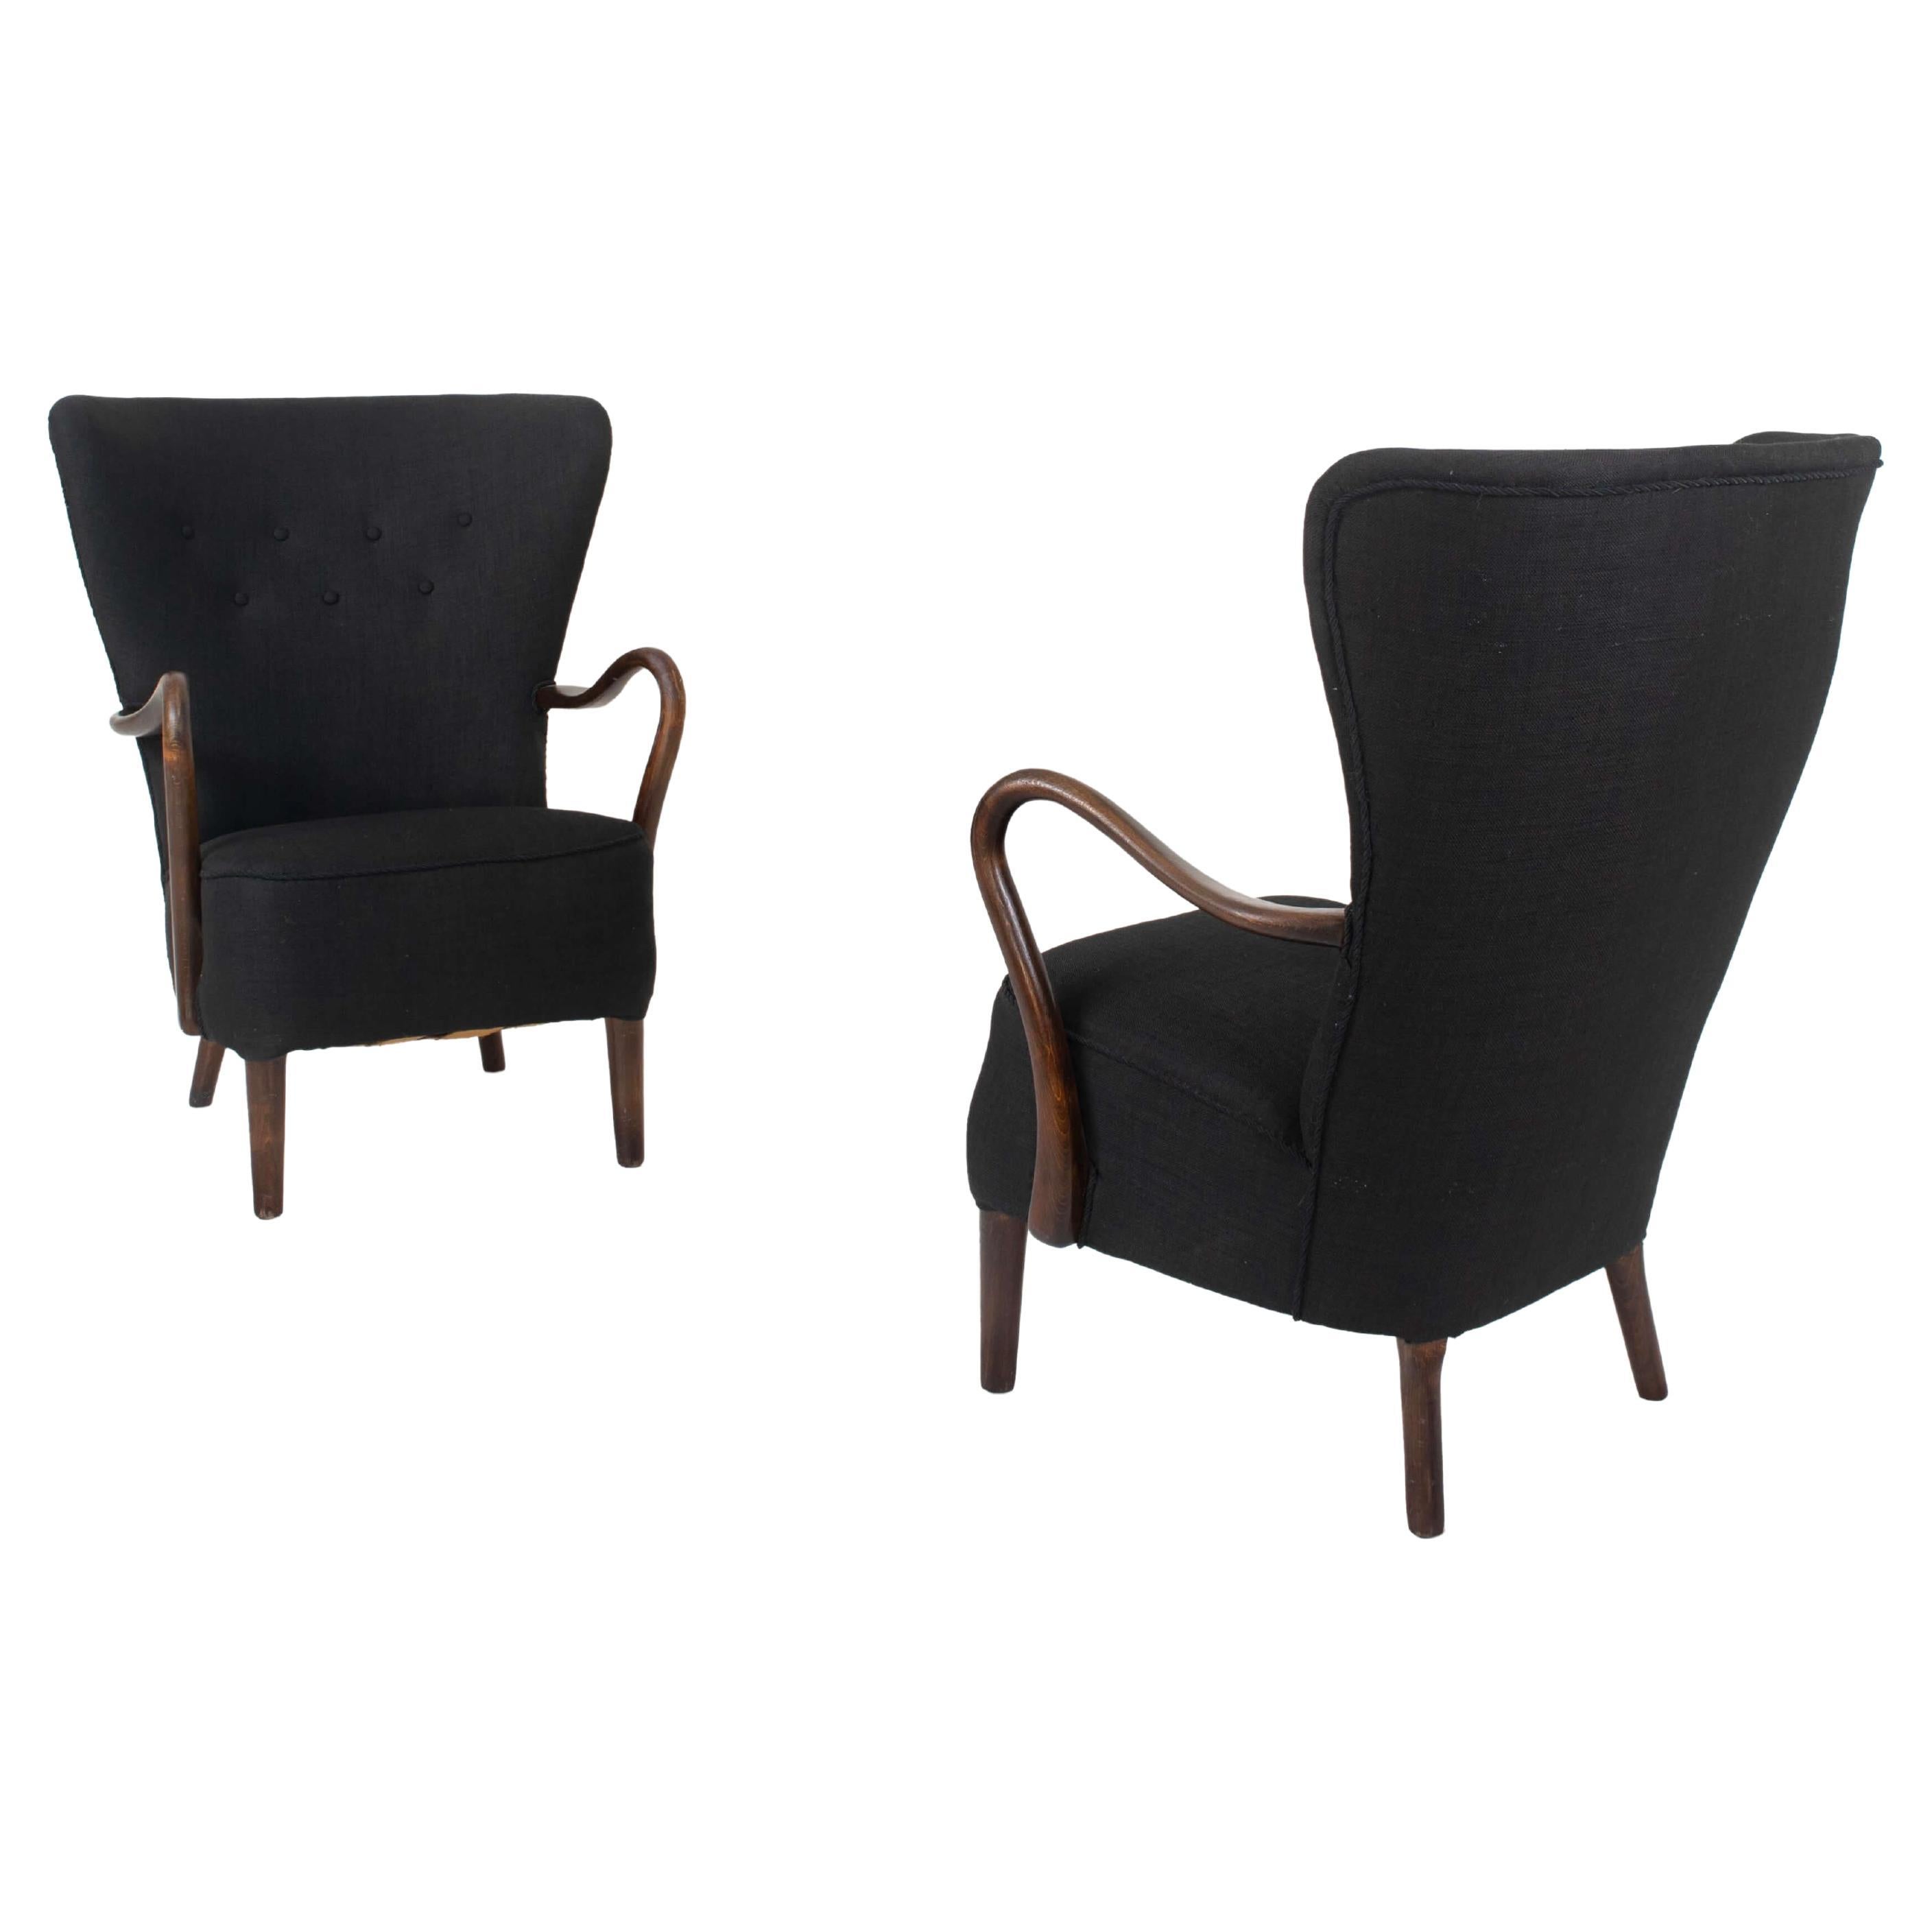 Set of Two Chairs by Alfred Christensen for Slagelse Møbelfabrik, Denmark, 1940s